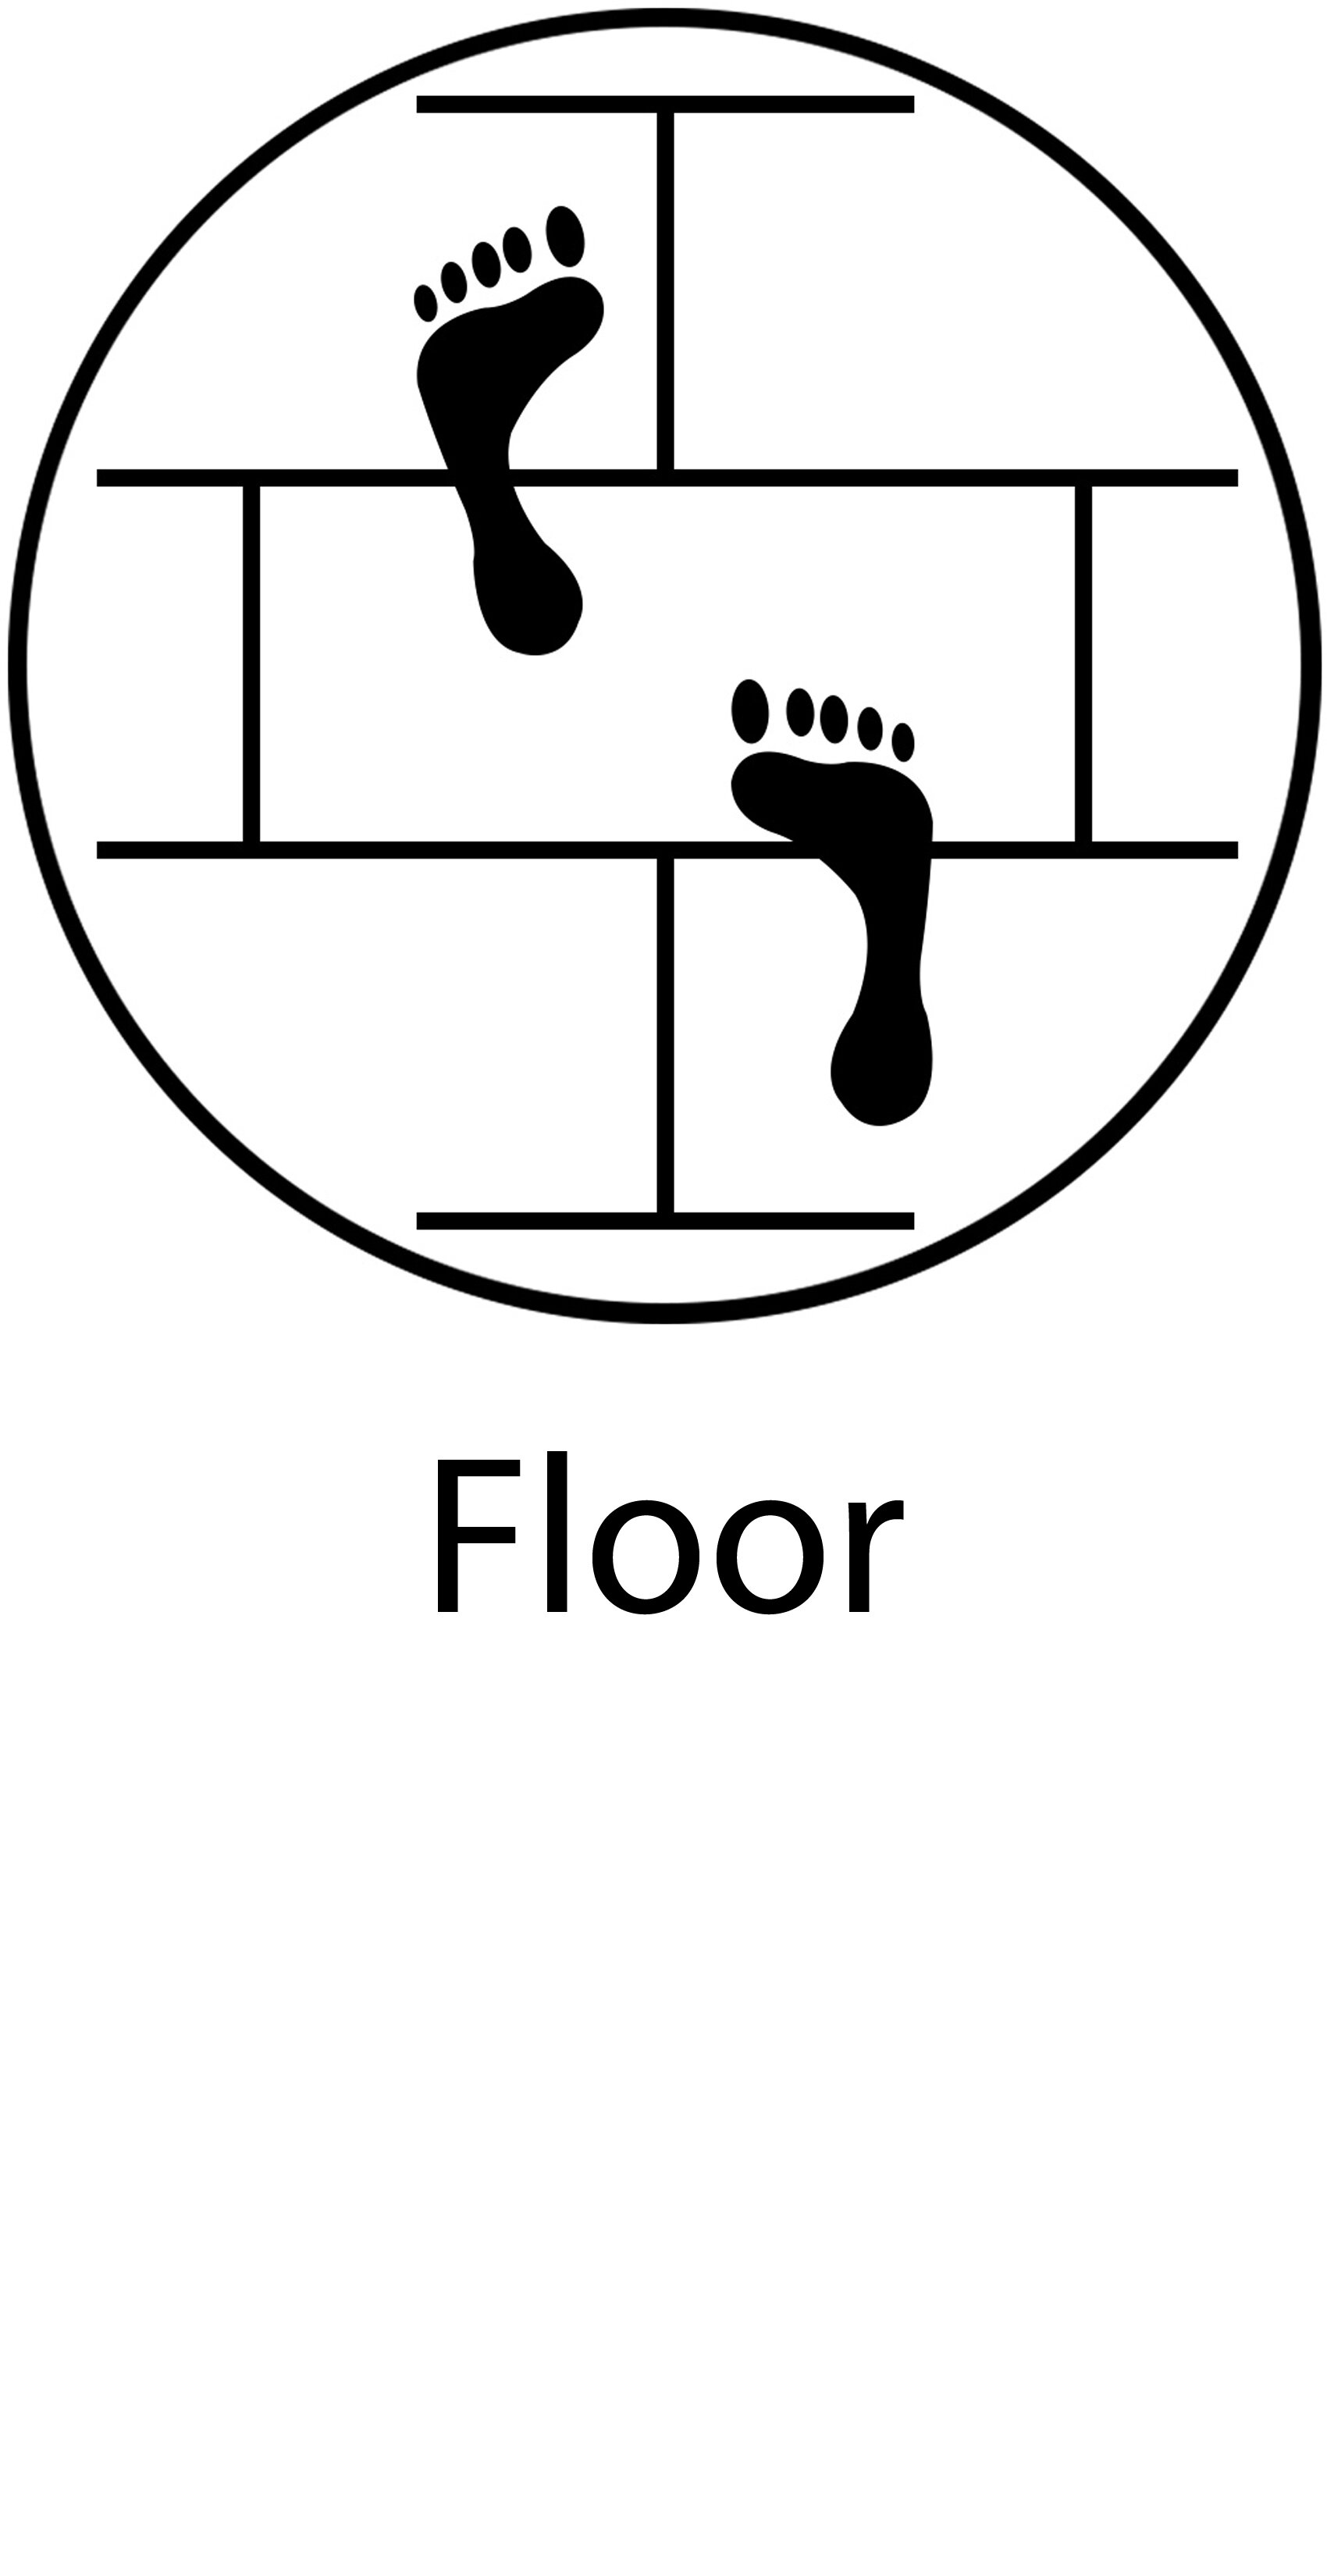 05 Floor.jpg